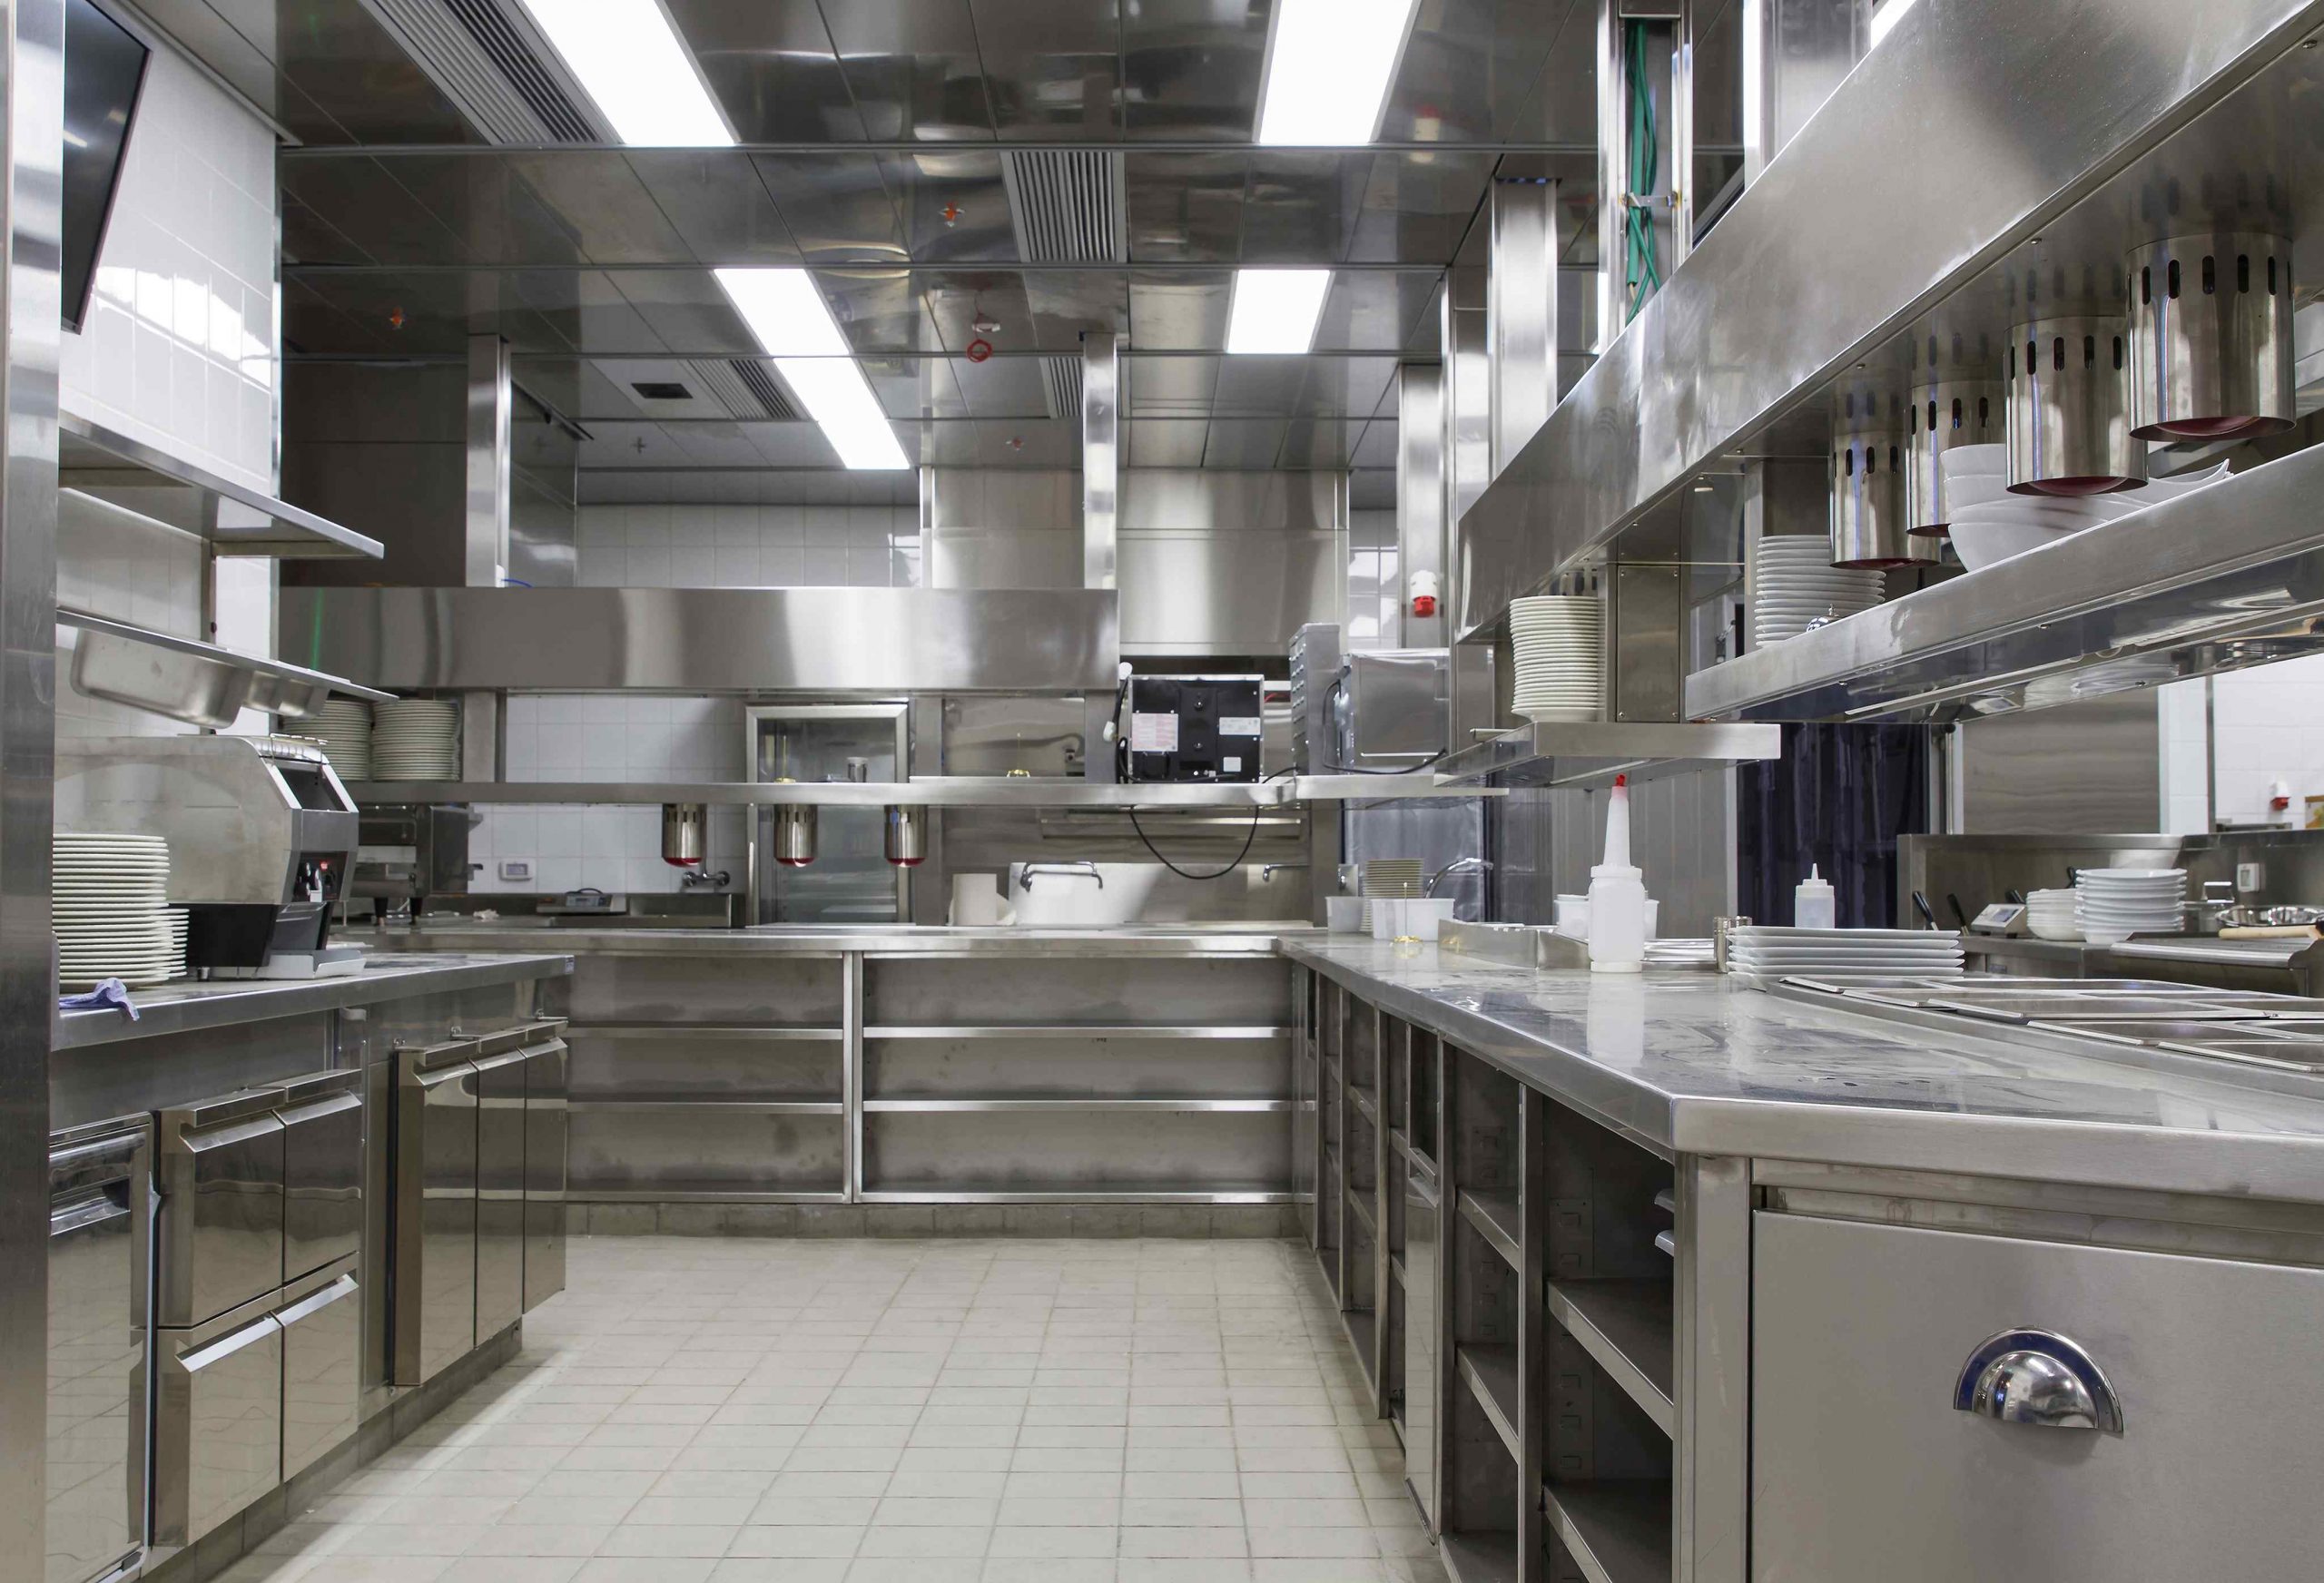 WA Warranty agents in commercial kitchen equipment